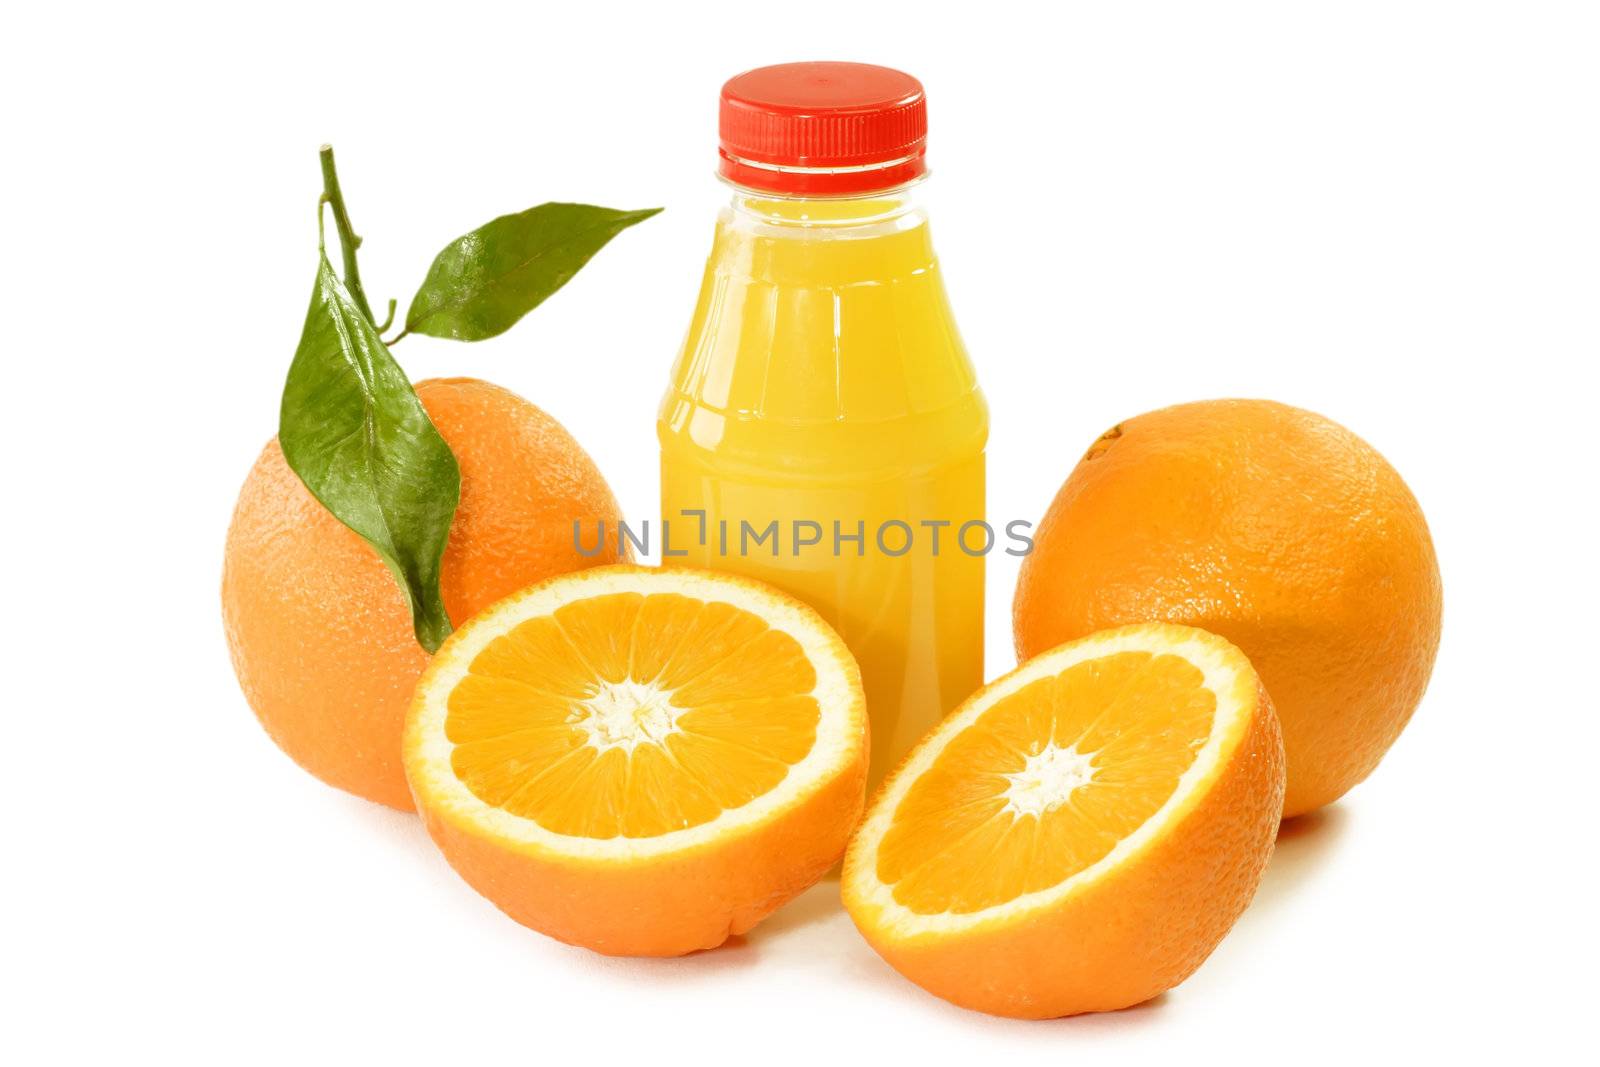 Fresh Orange with Orange Juice in the bottle on bright background. 